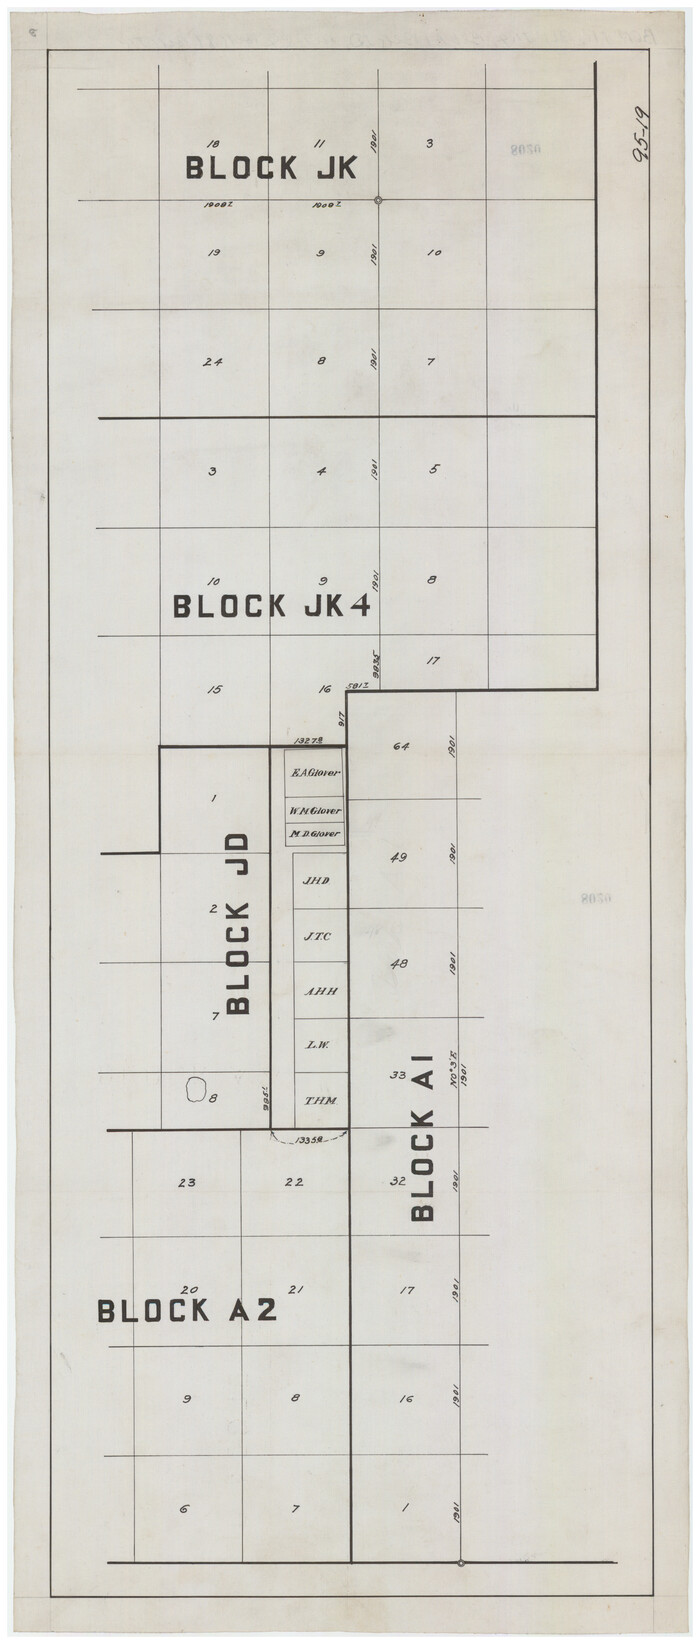 90748, [Blocks JK, JK4, JD, A1, and A2], Twichell Survey Records